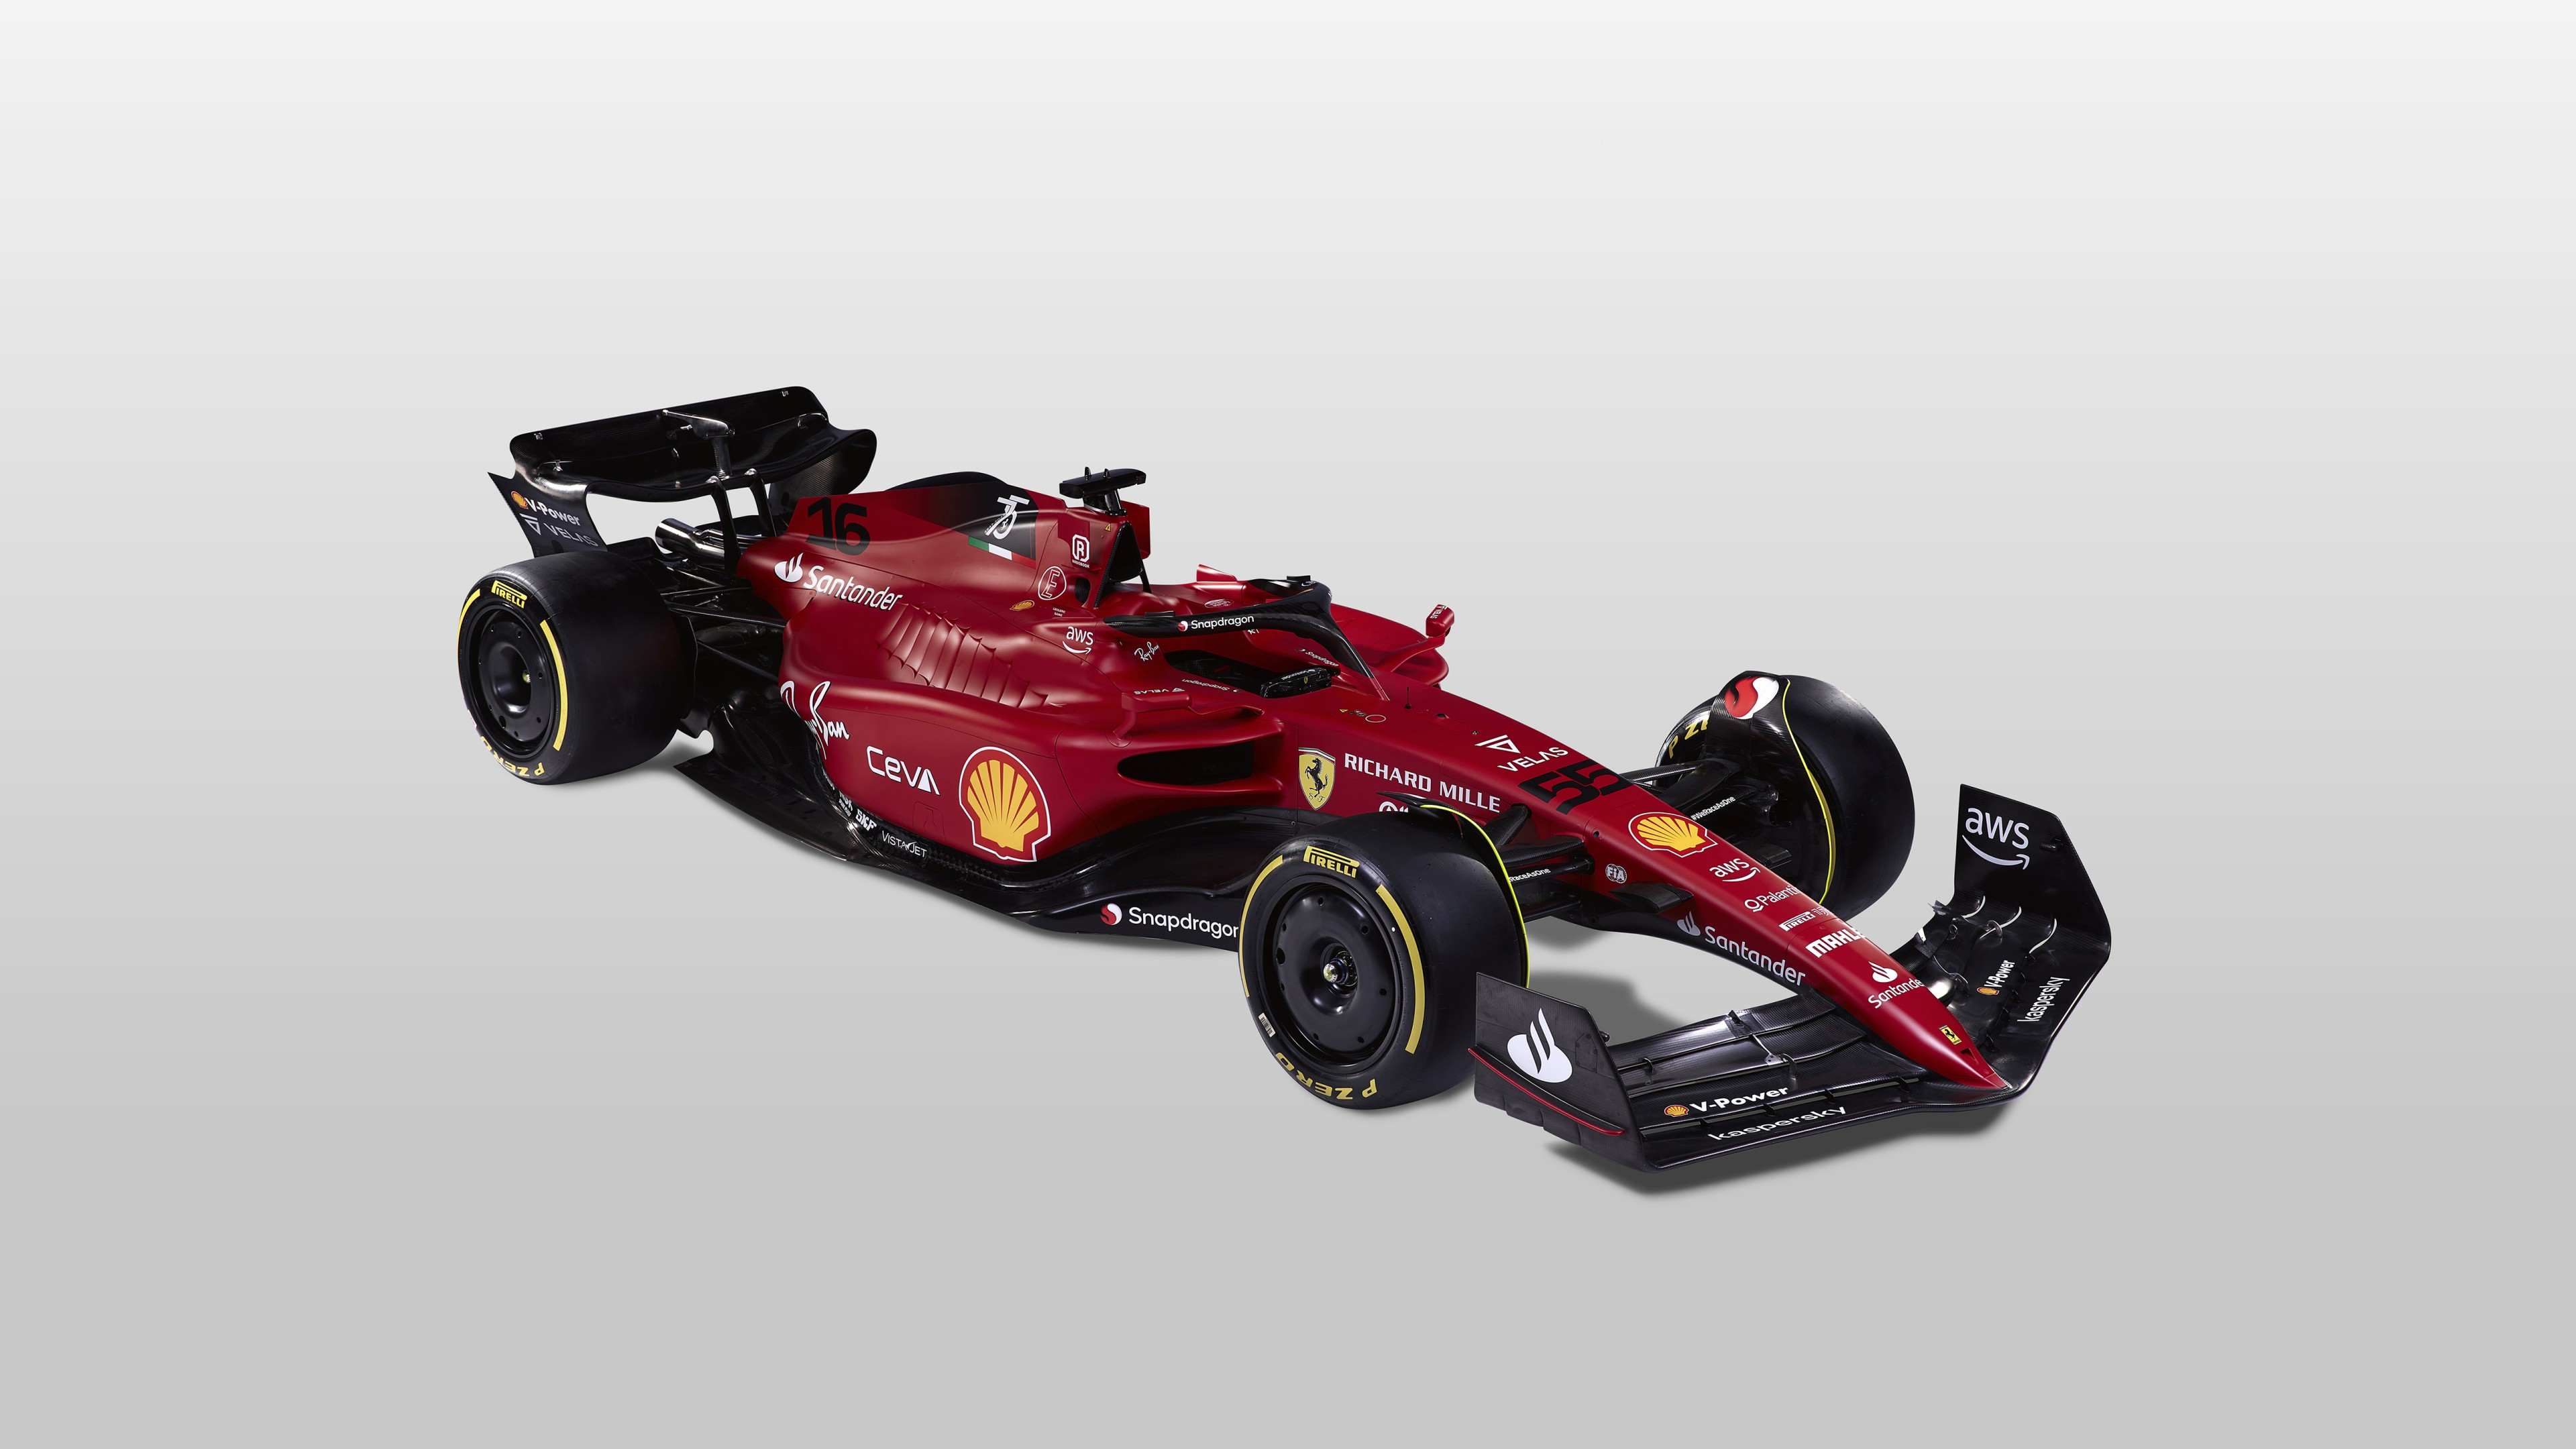 Ferrari F175 Formula 1 2022 new car front view white background 4K  wallpaper download